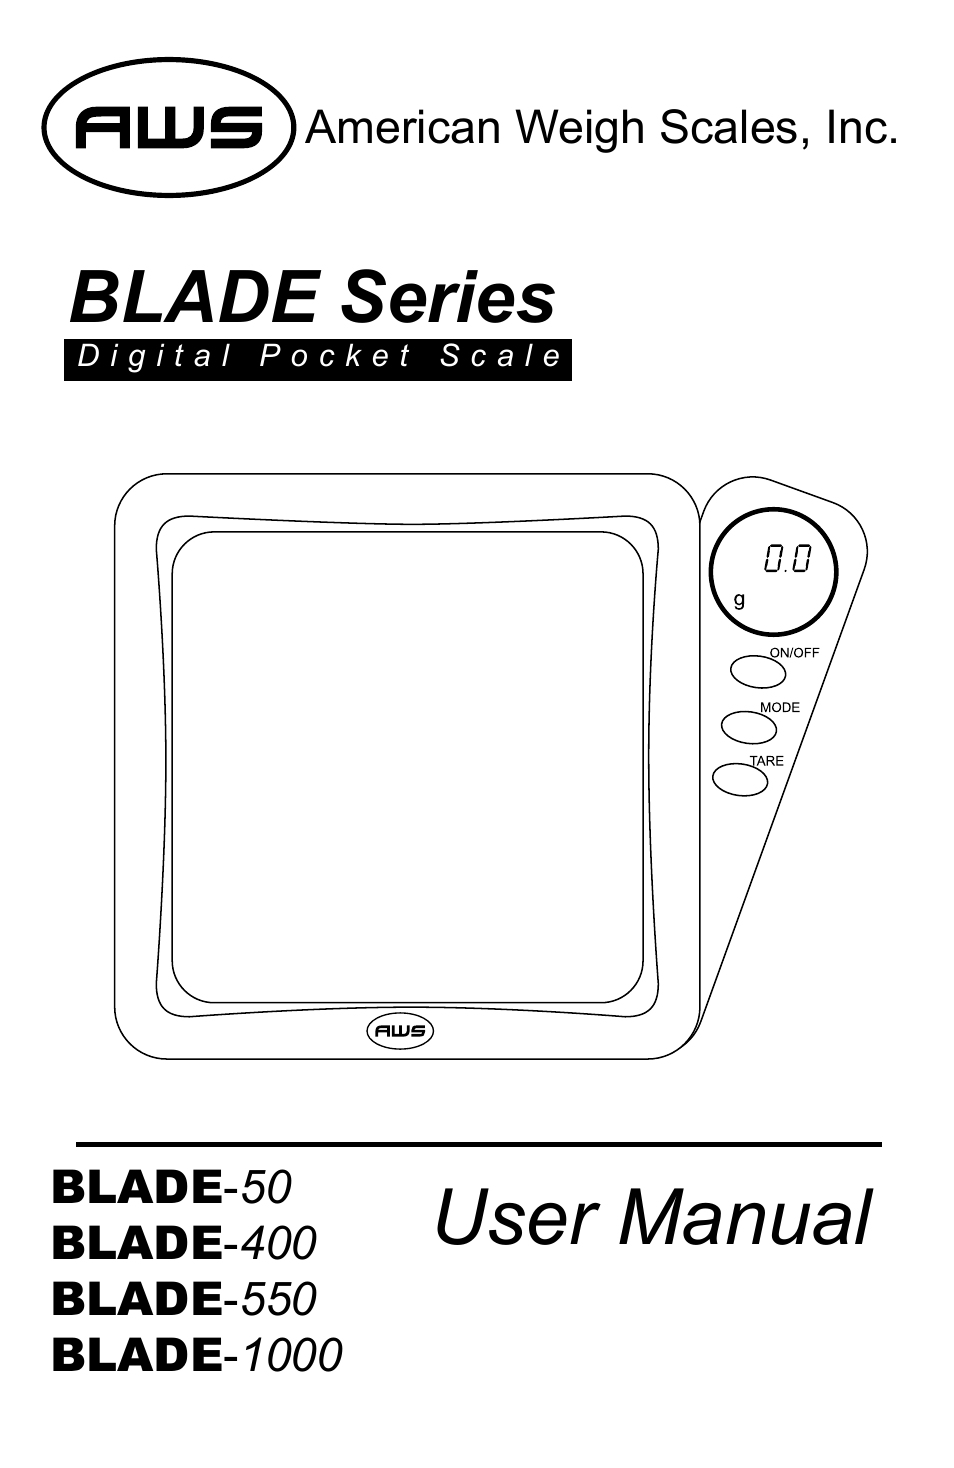 Blade-1000